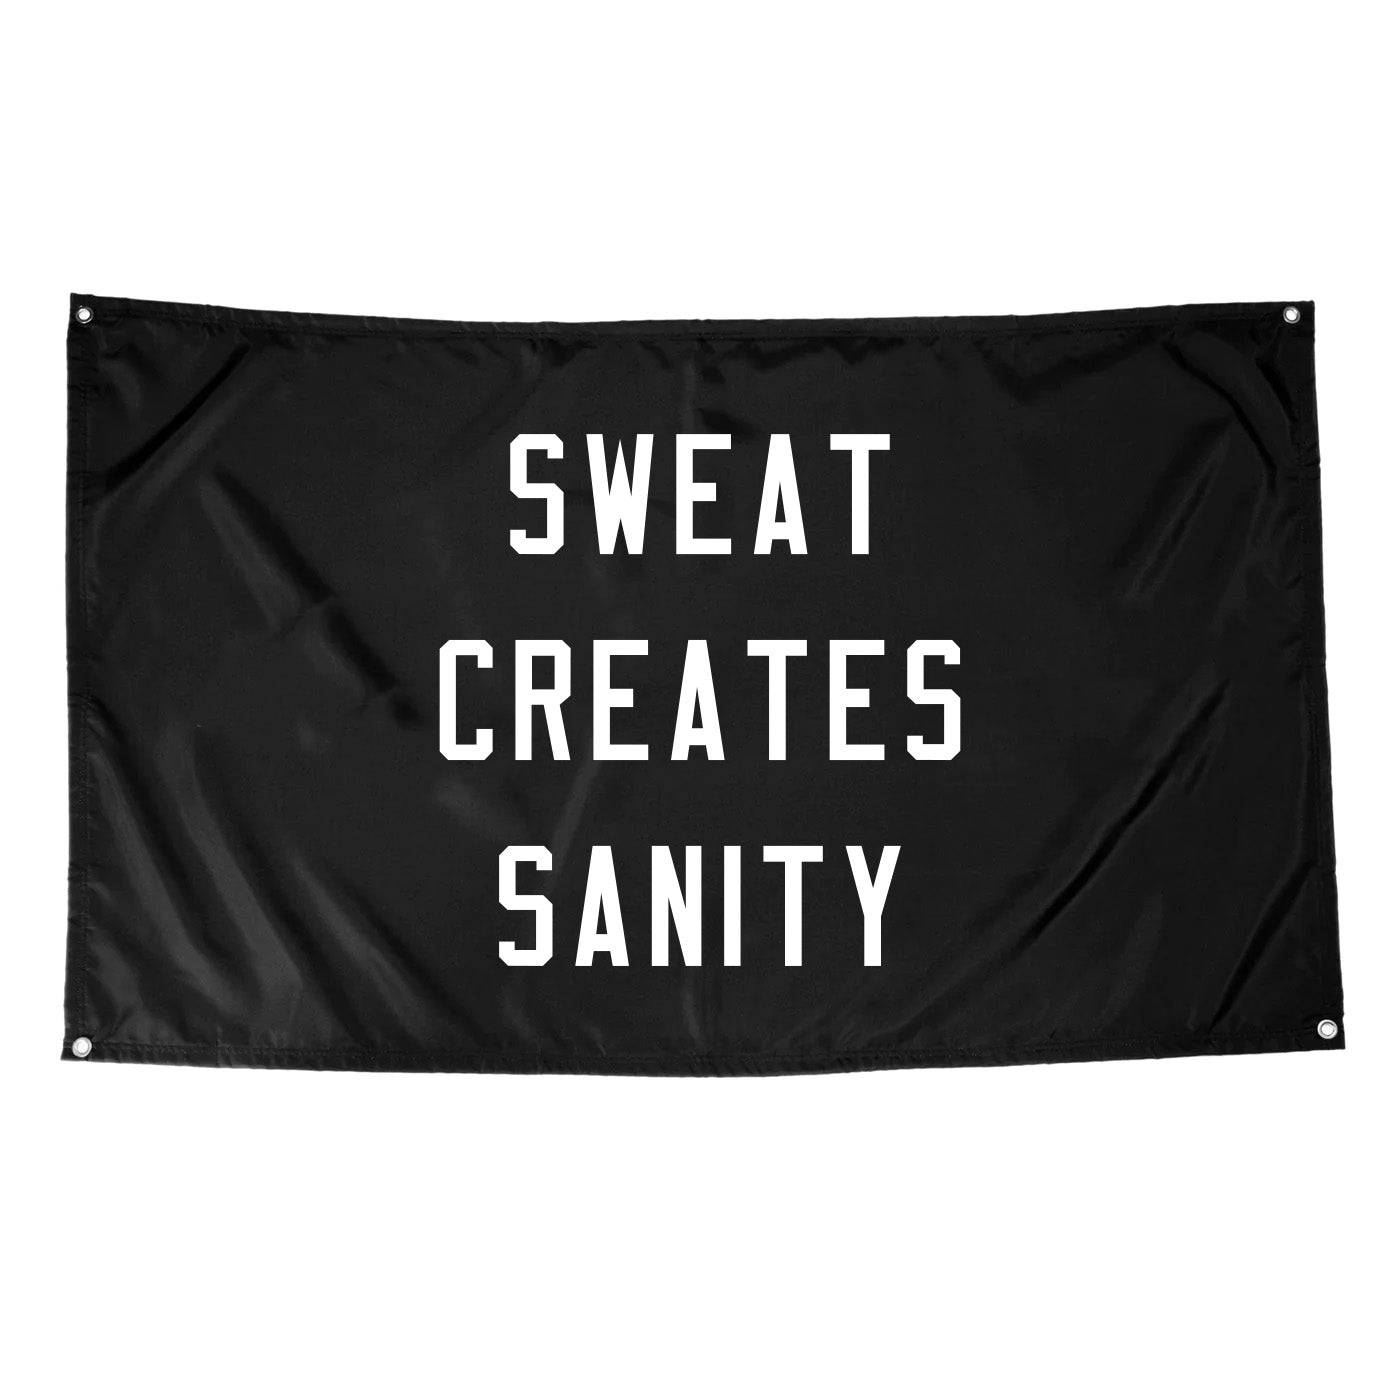 Sweat Creates Sanity Gym Flag (5' x 3')